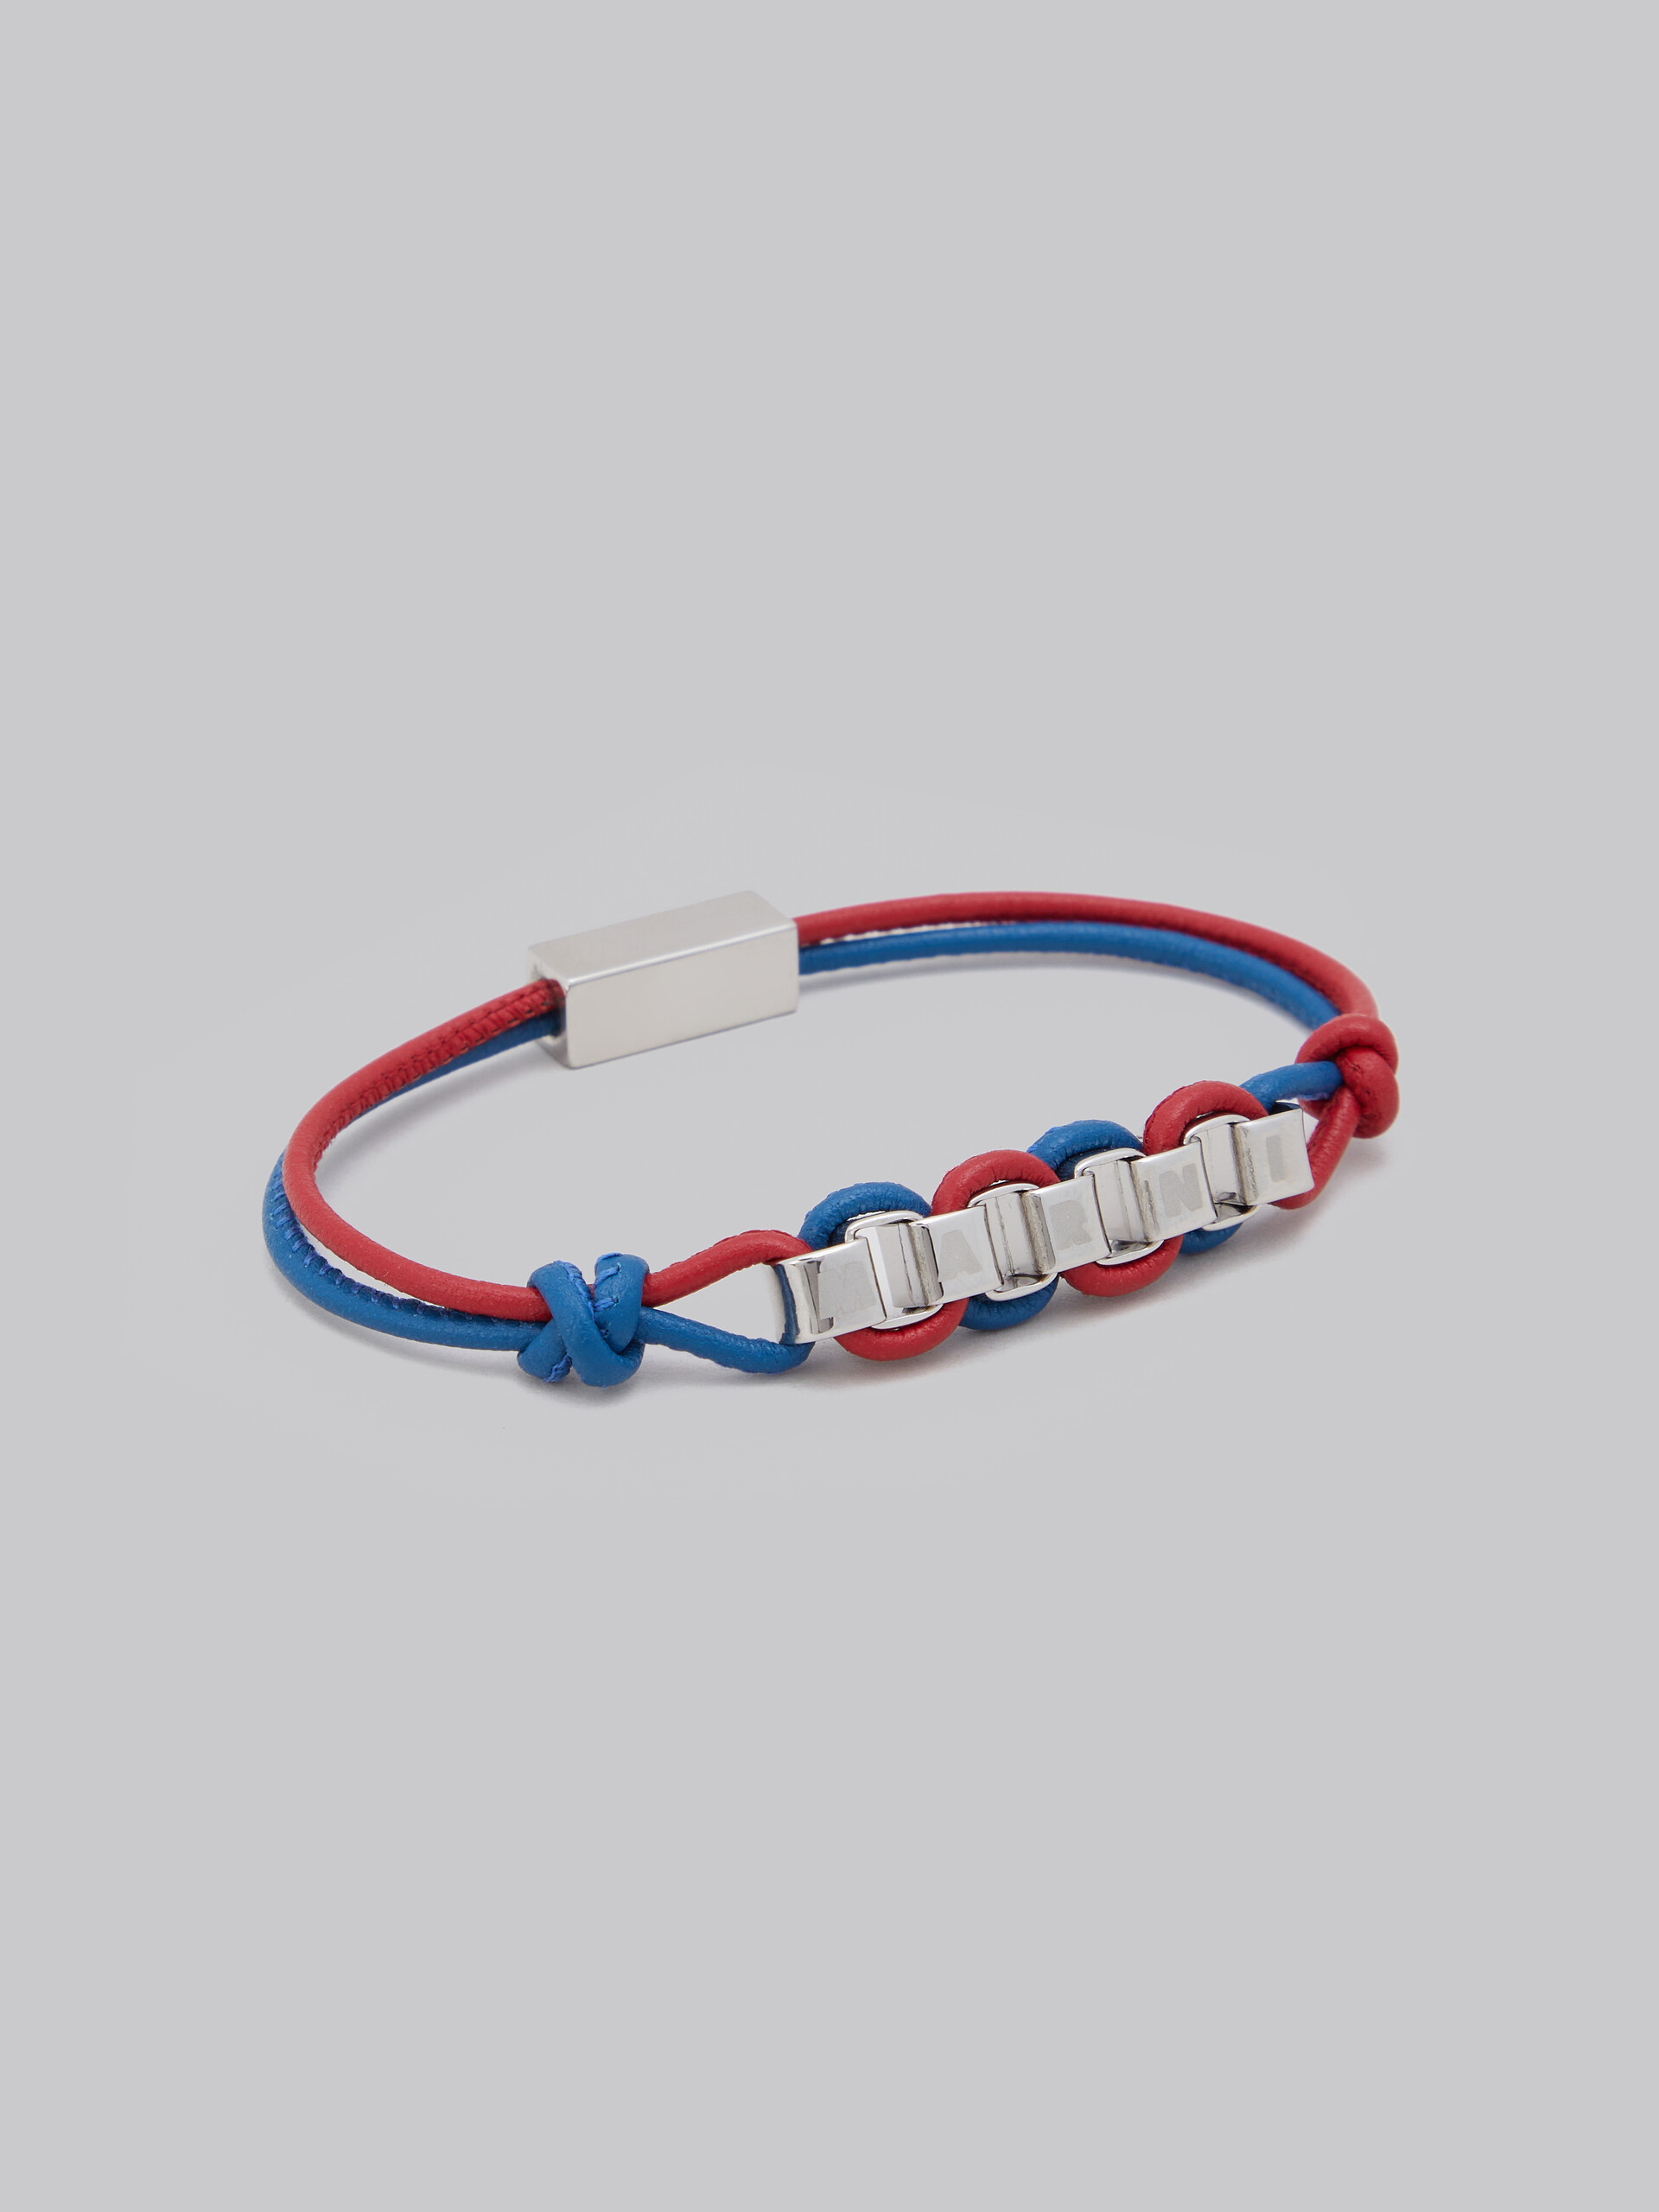 Armband aus Leder mit Marni-Logo in Rot und Blau - Armbänder - Image 4